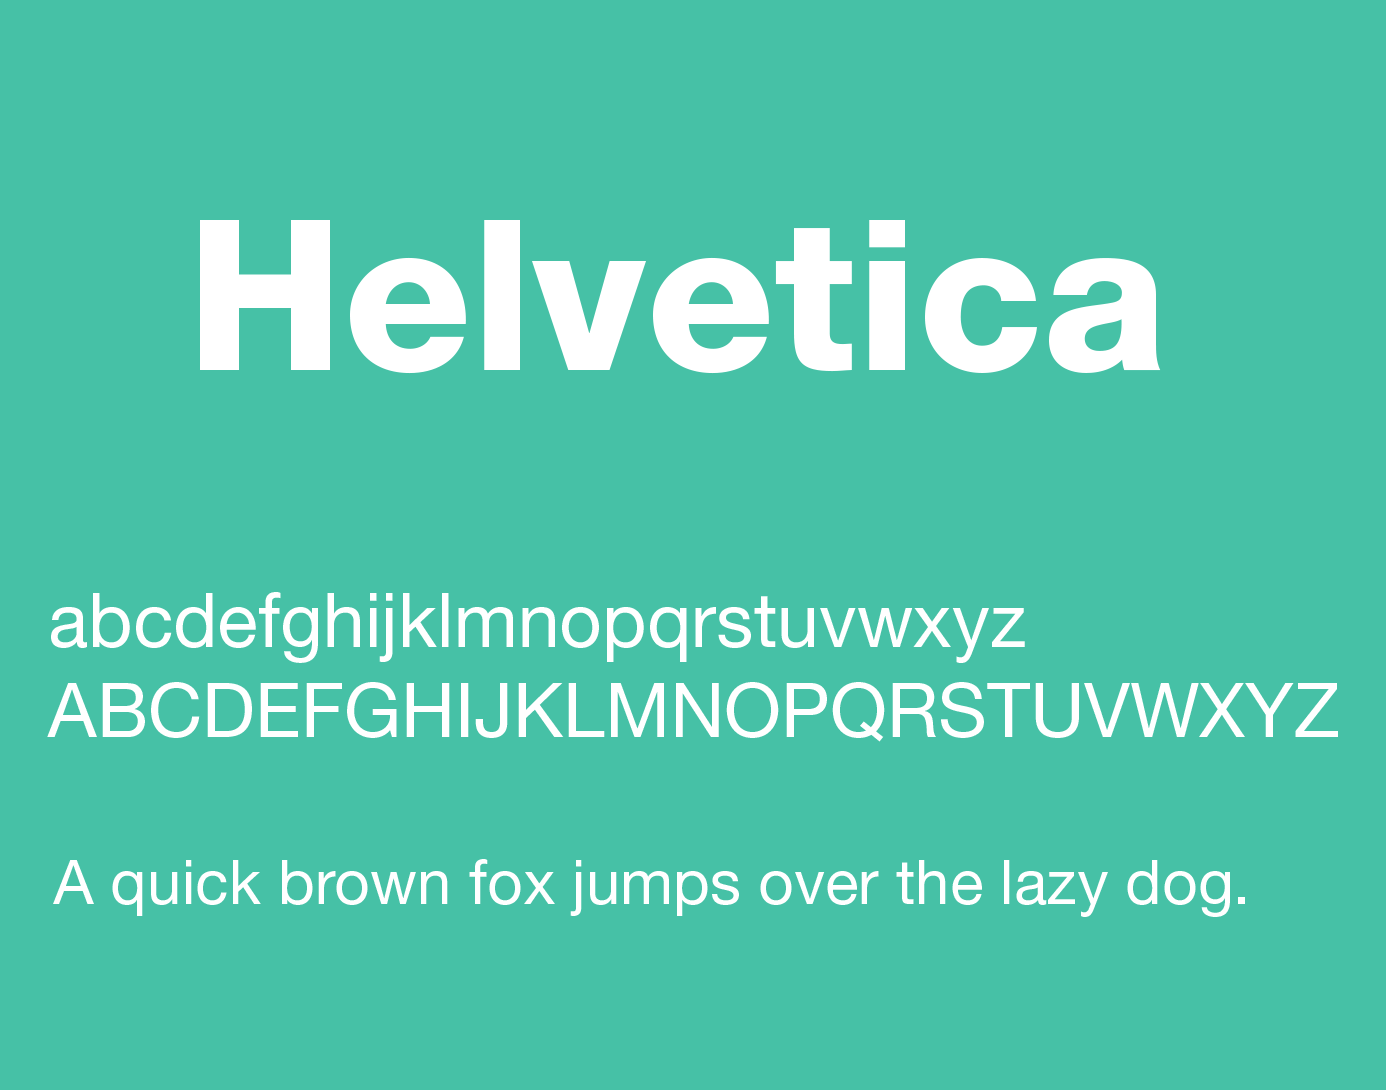 Helvetica bold free font download online